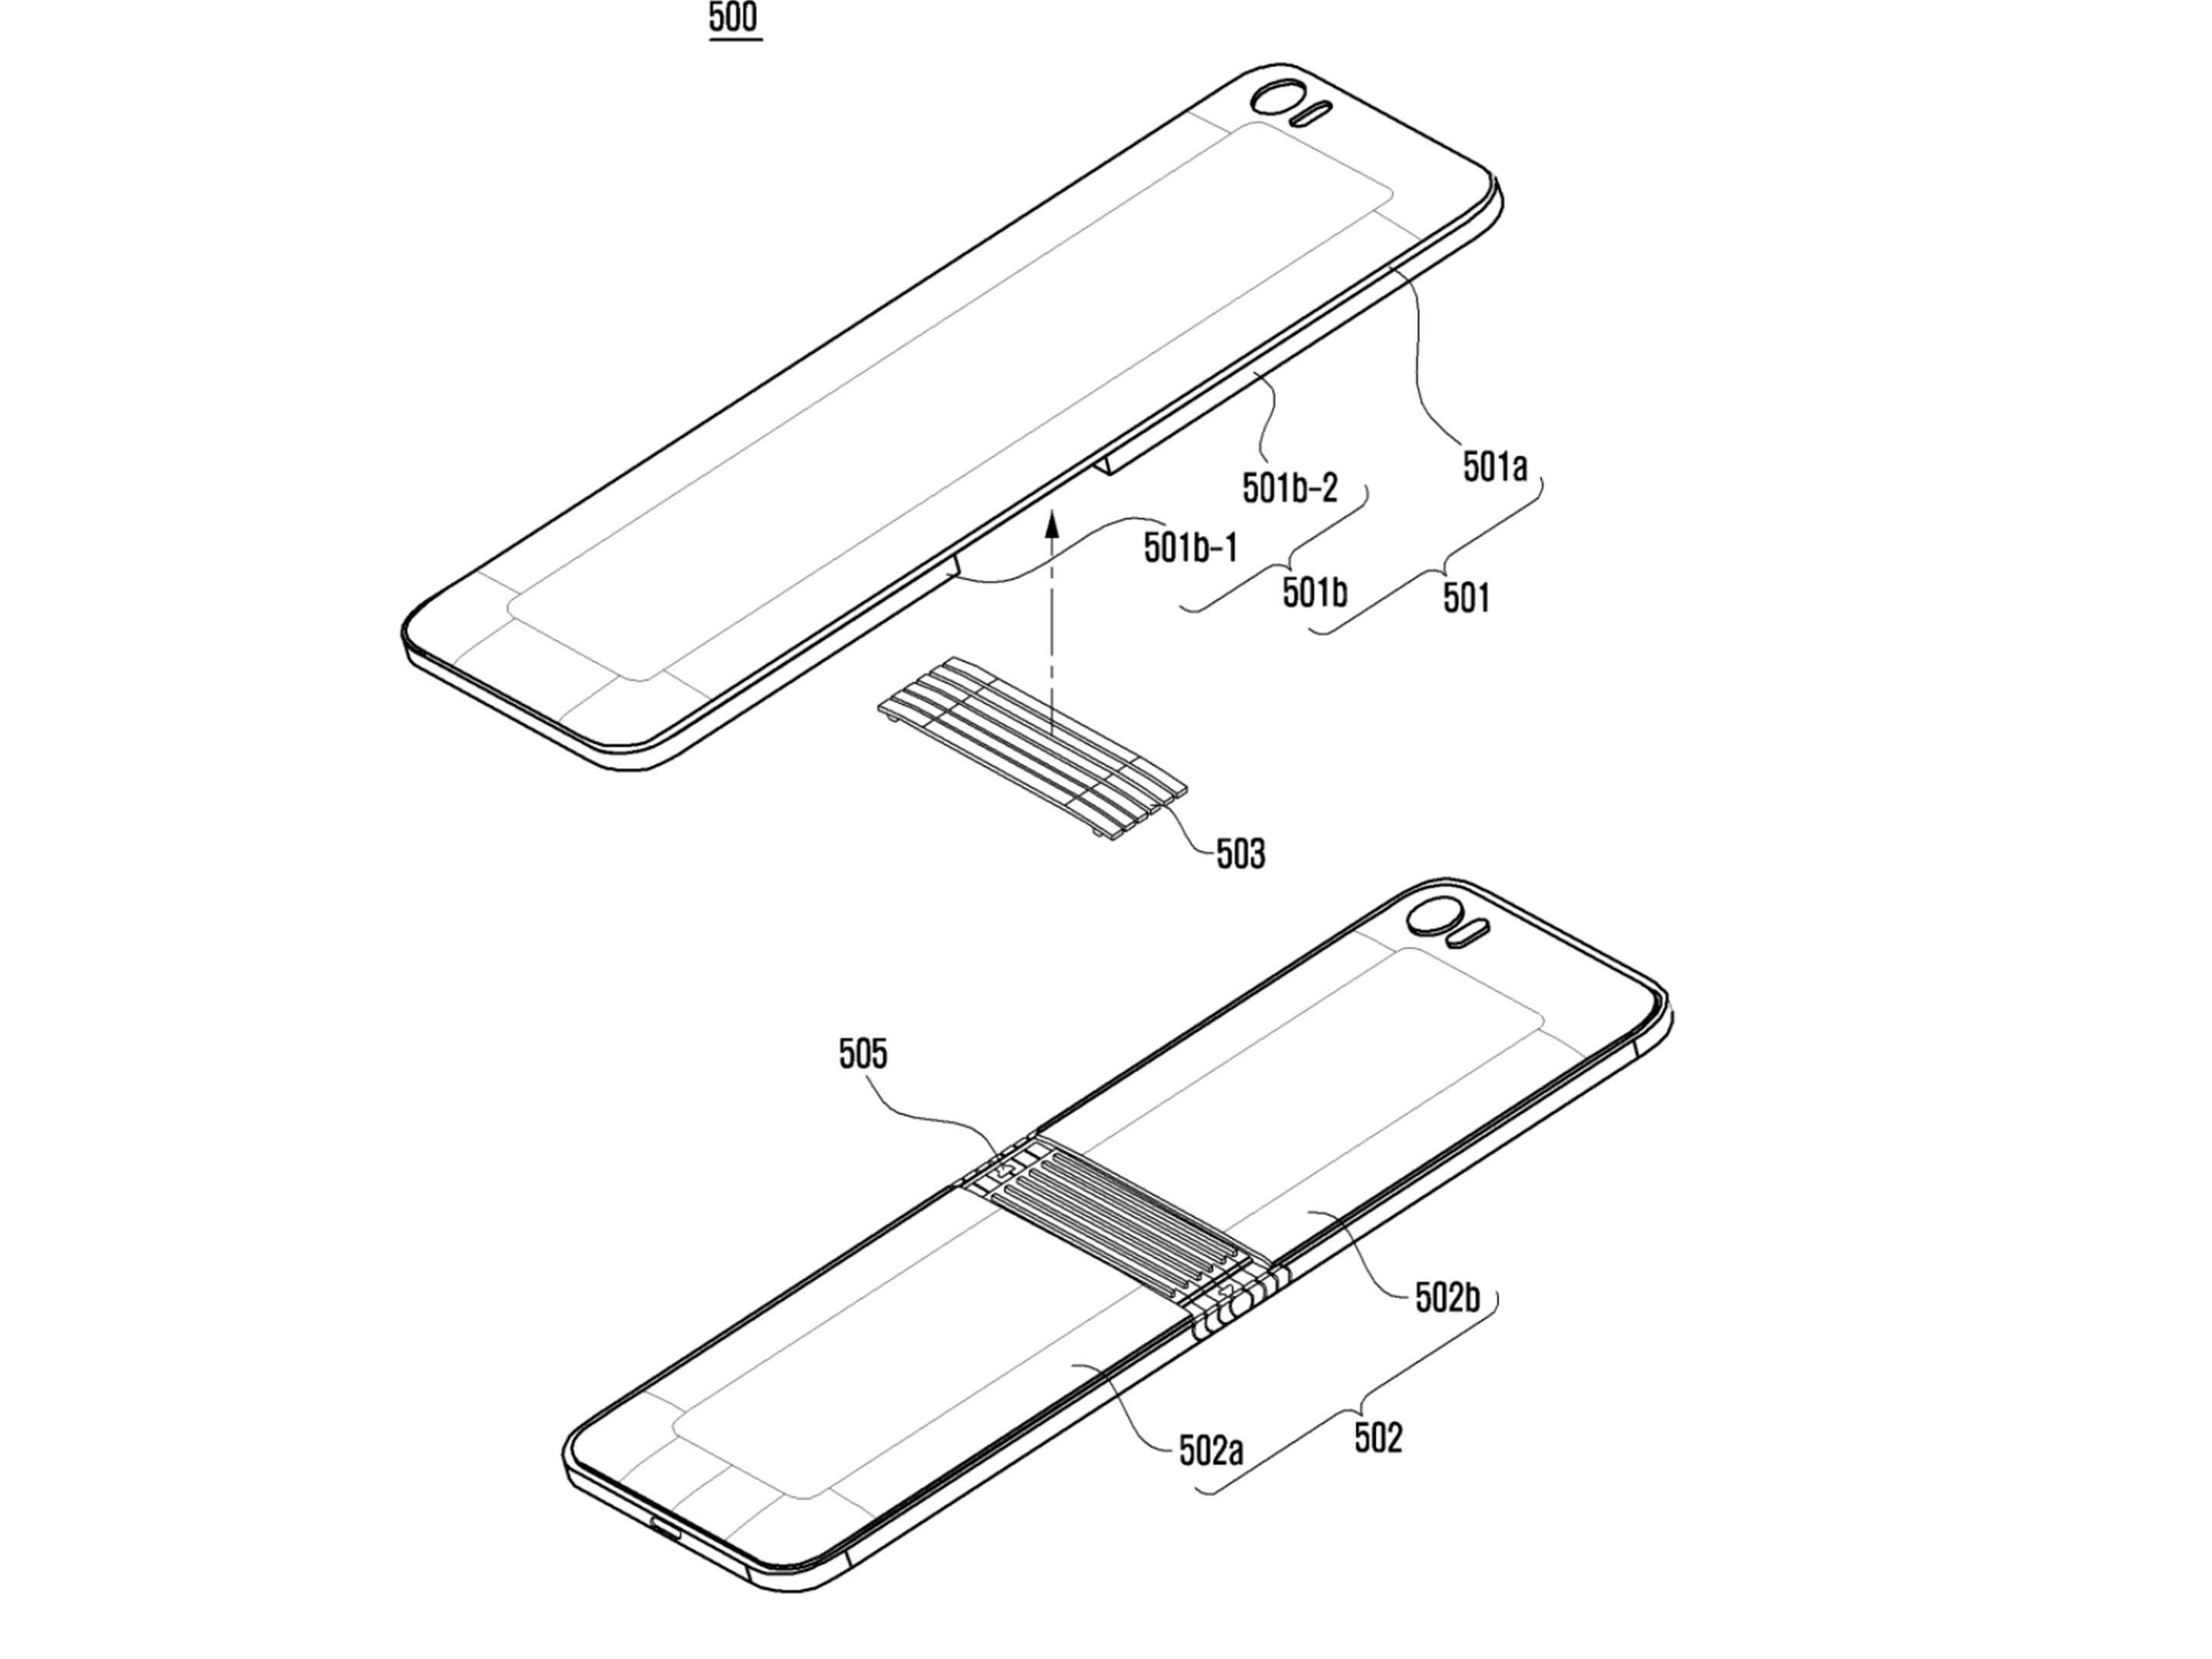 Samsung foldable phone patent